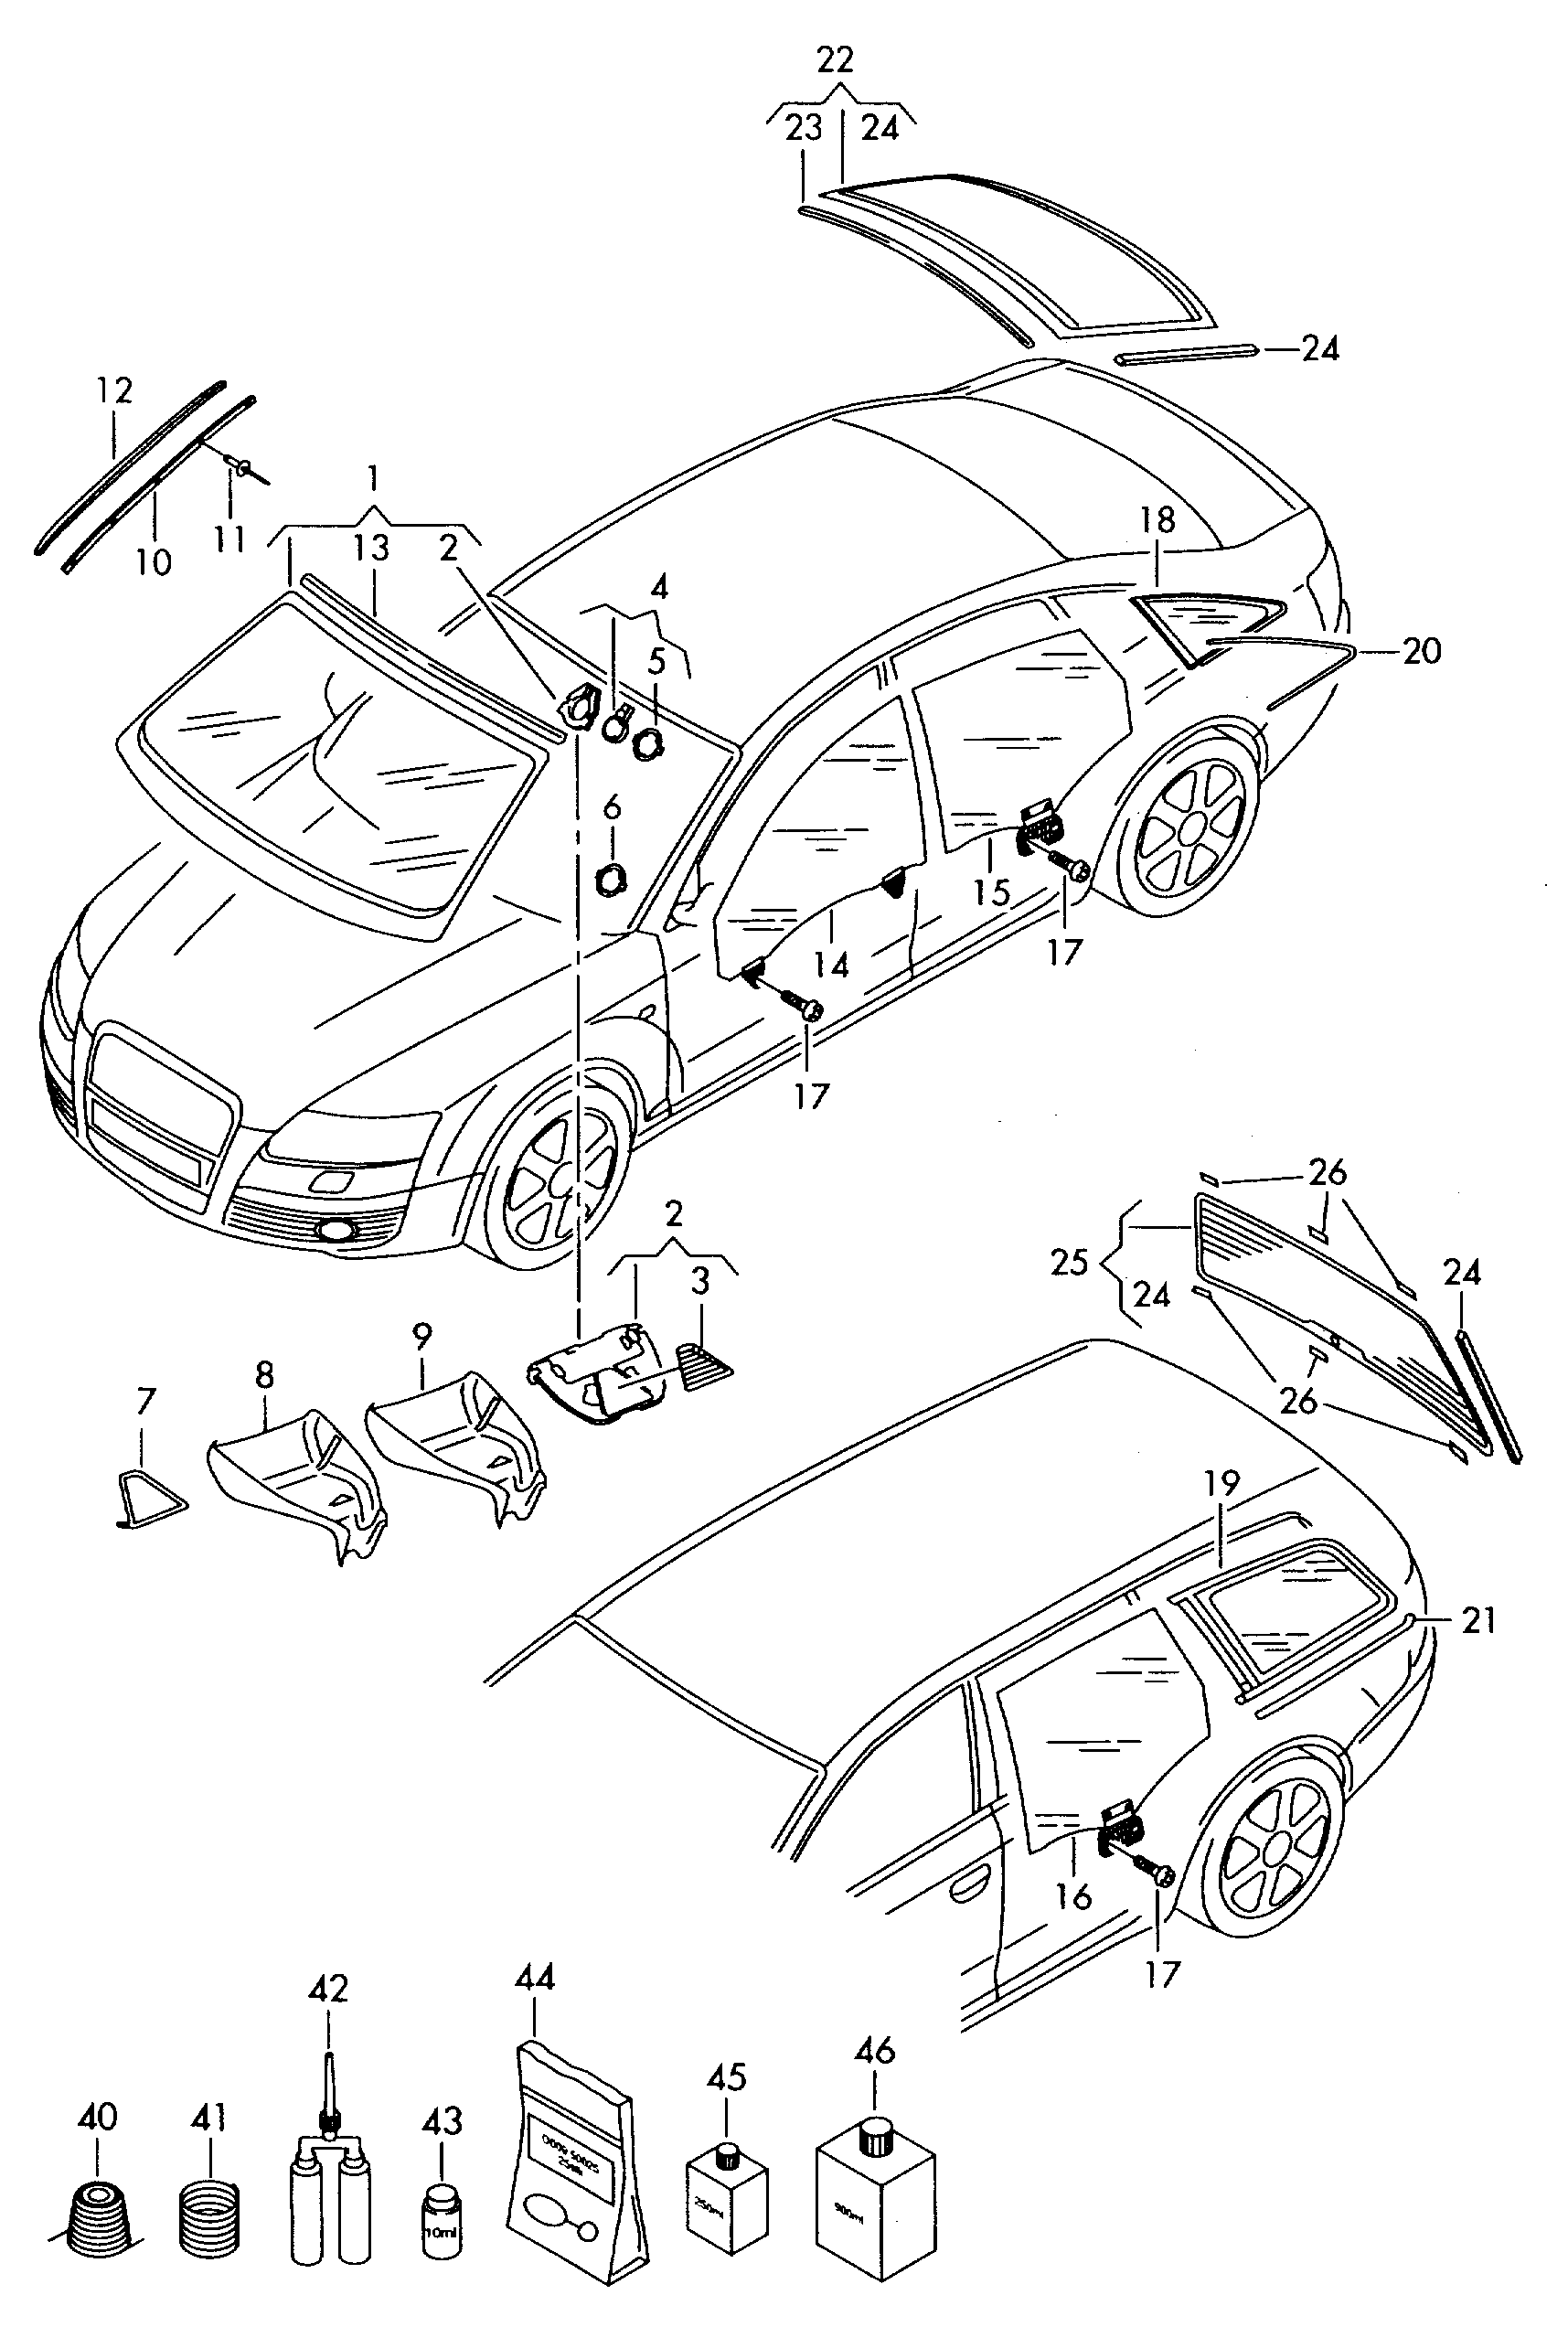 Fensterscheiben; fuer Sonderschutz-Fahrzeug - Audi A6/S6/Avant quattro(A6Q)  